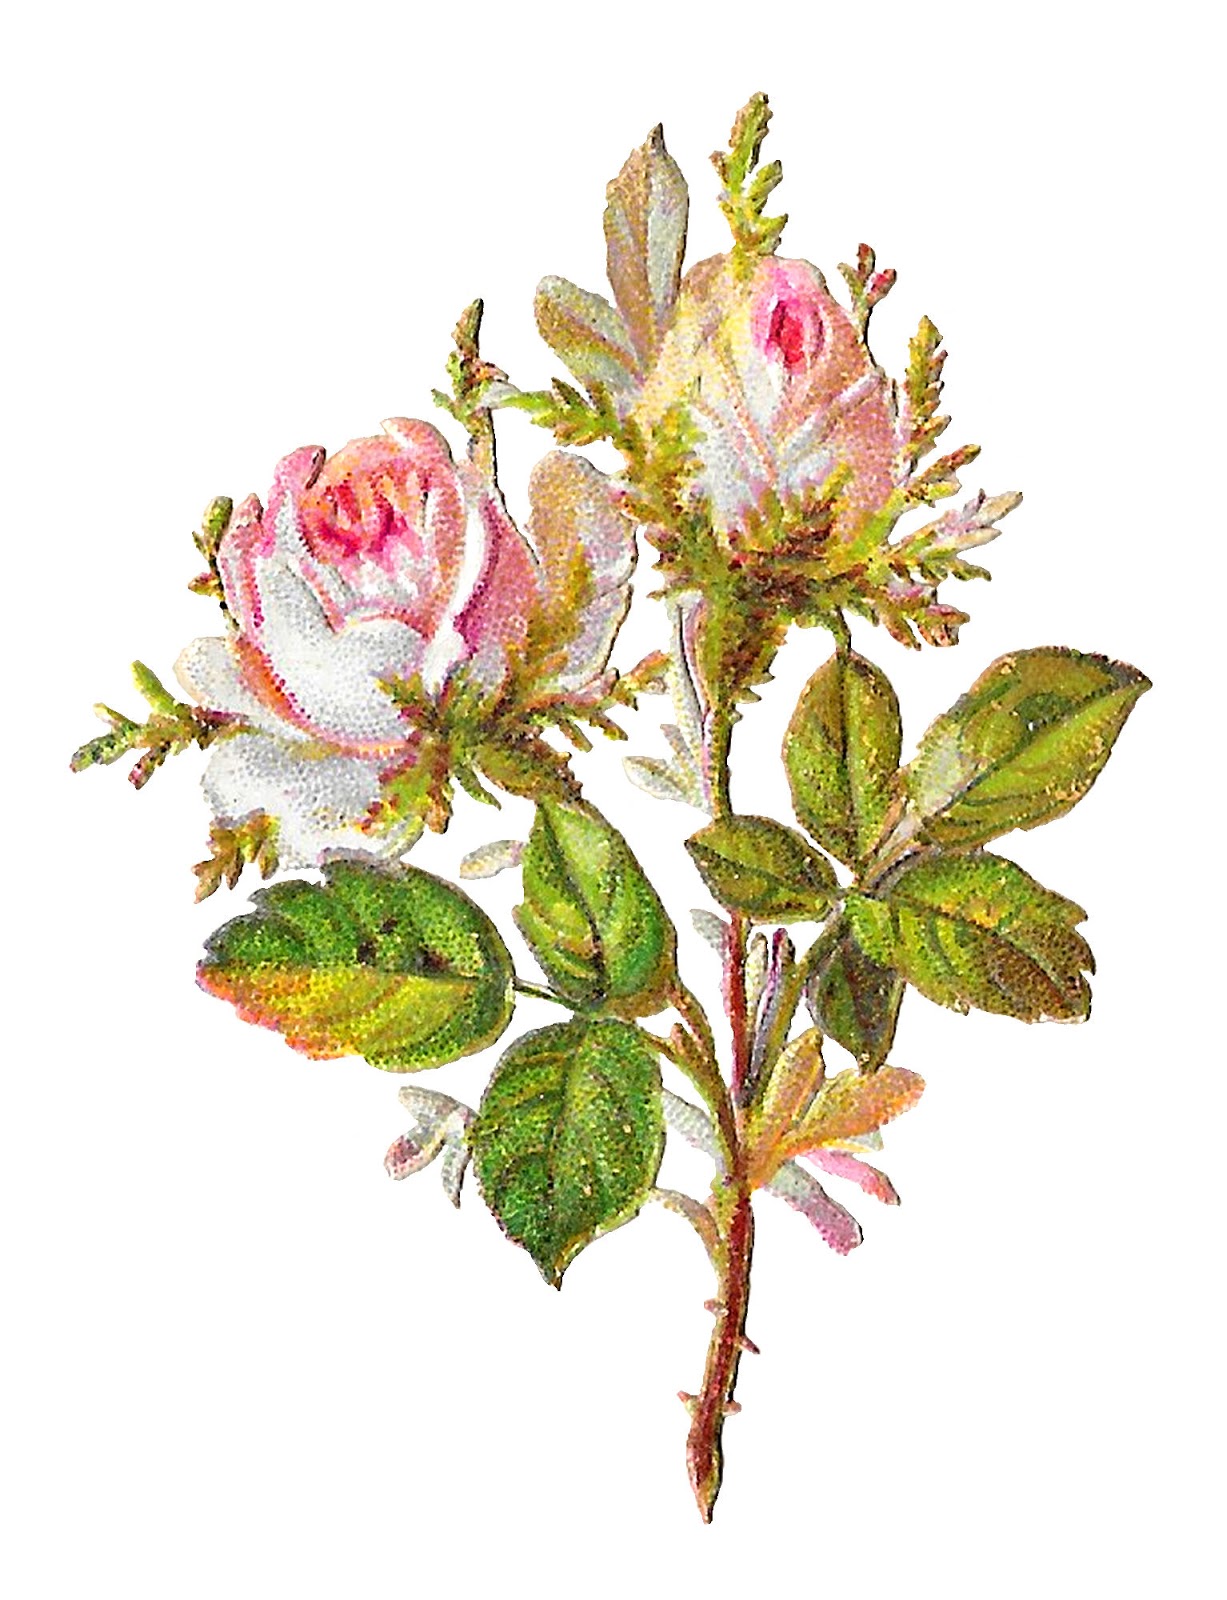 Antique Images Shabby Chic White Rose Vintage Clipart Botanical Art